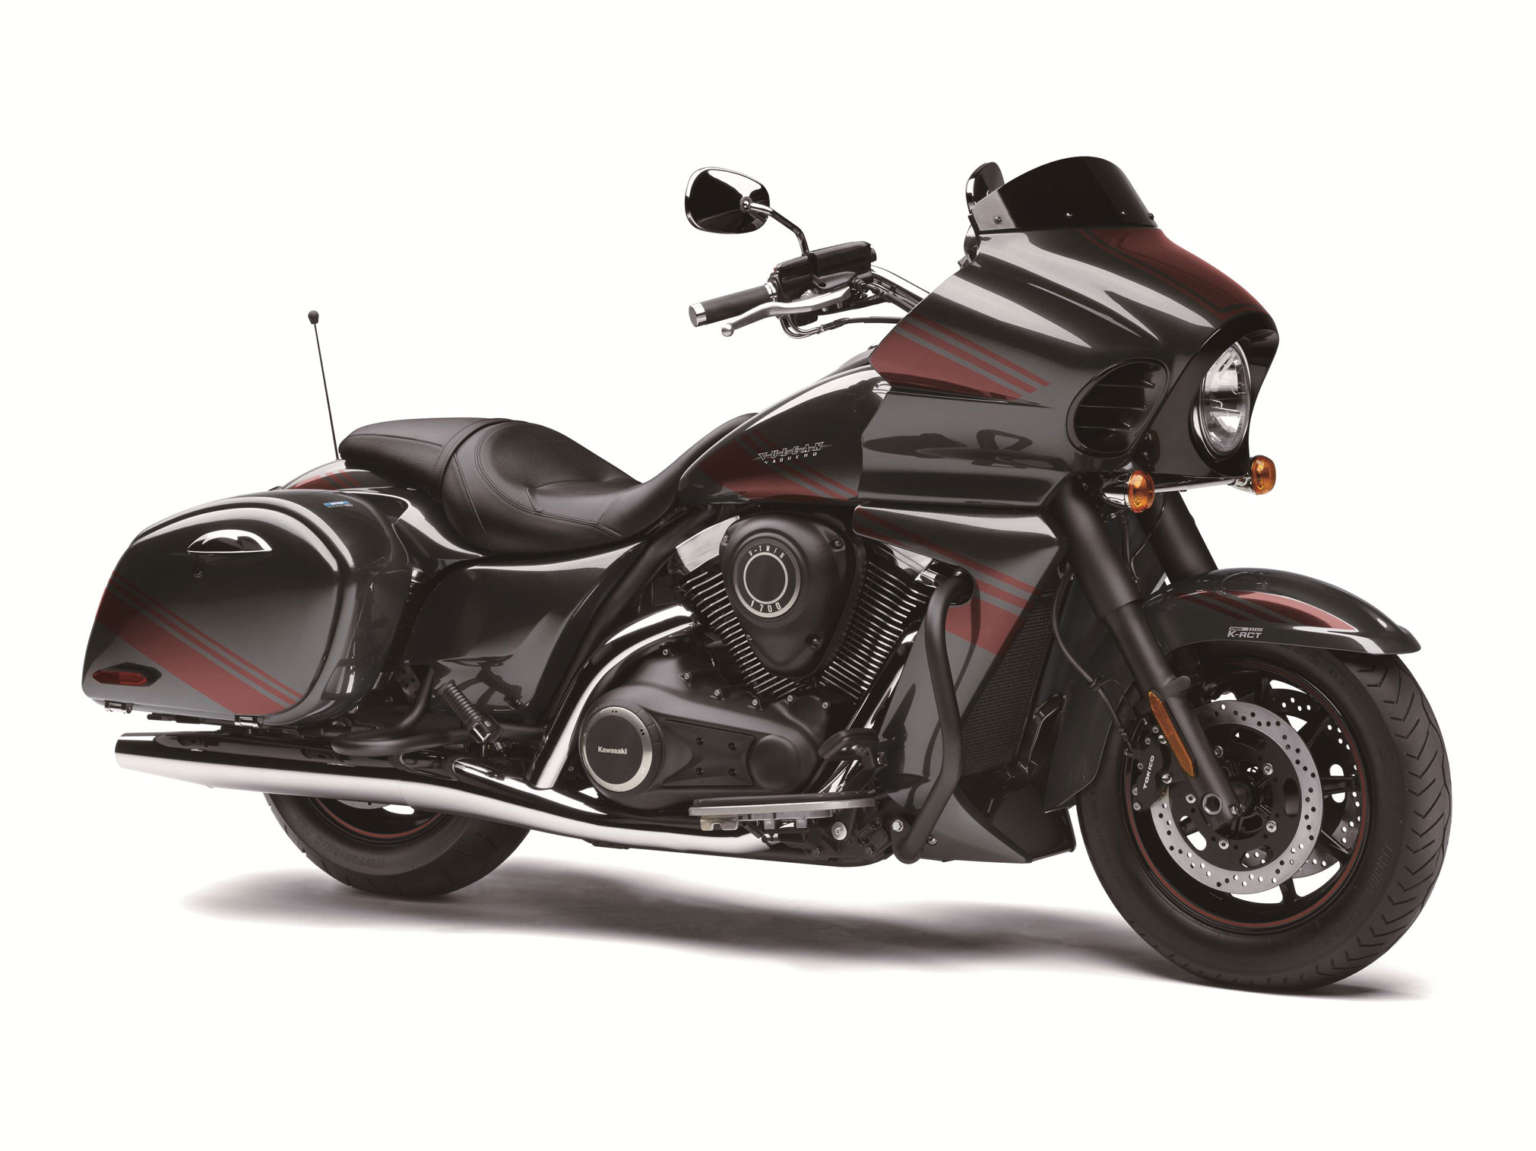 2021 Kawasaki Vulcan 1700 Vaquero ABS Guide • Total Motorcycle